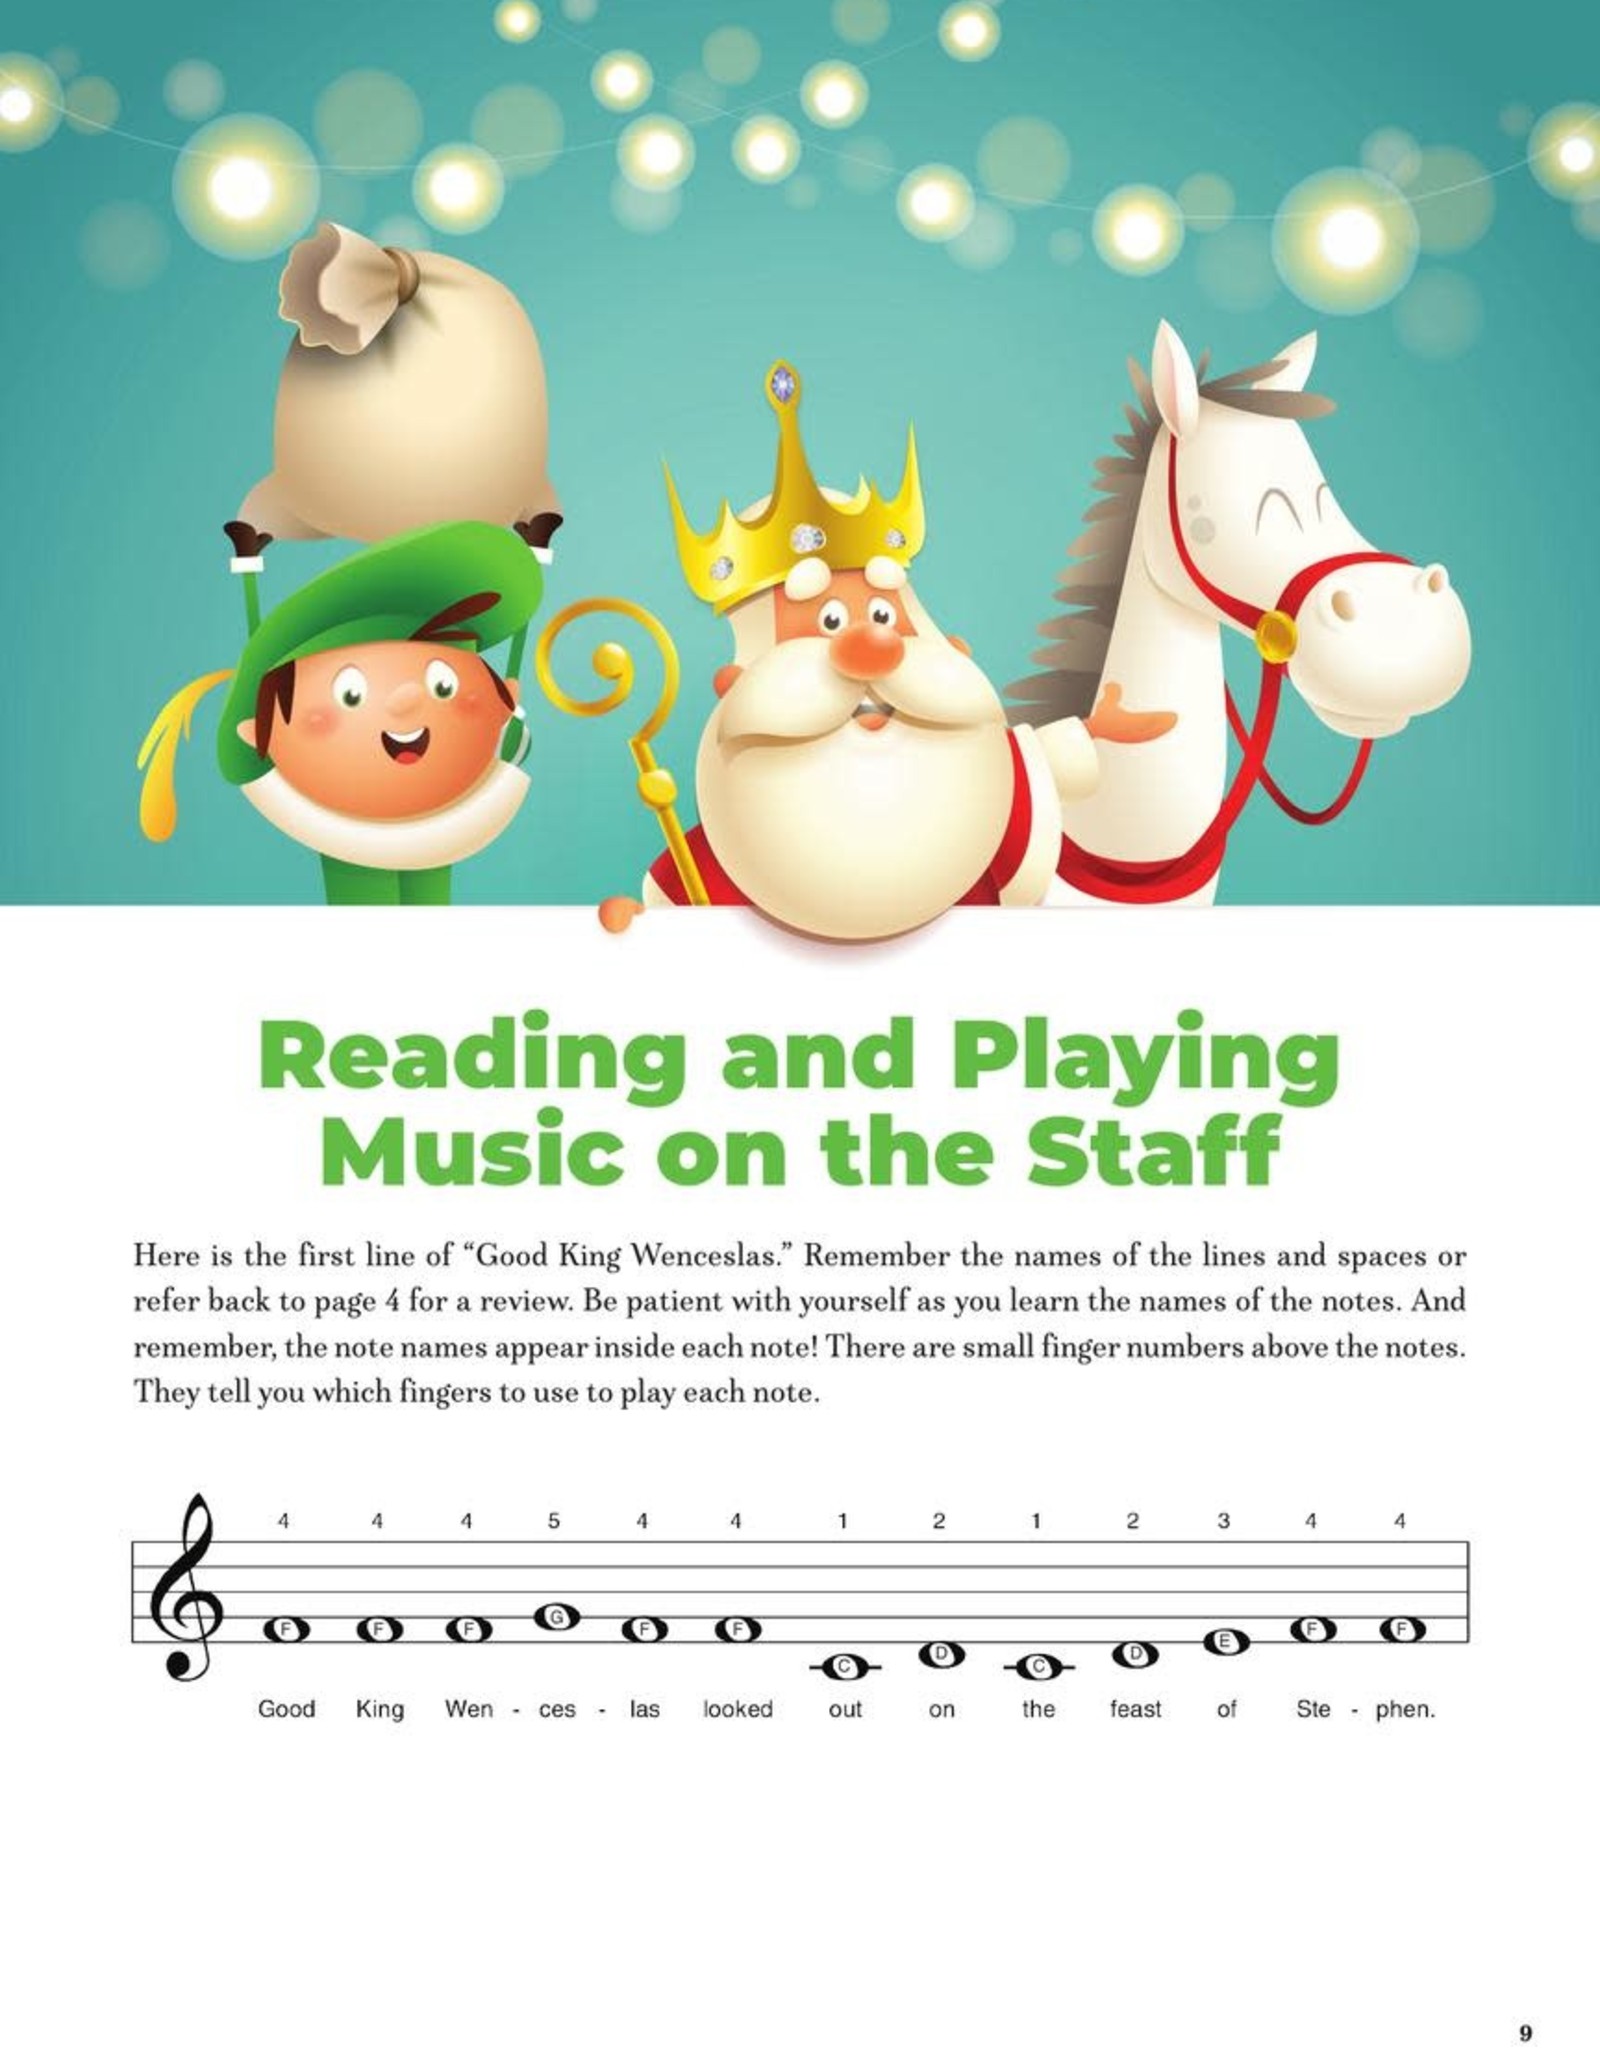 Hal Leonard Christmas Carols Music Activity Book